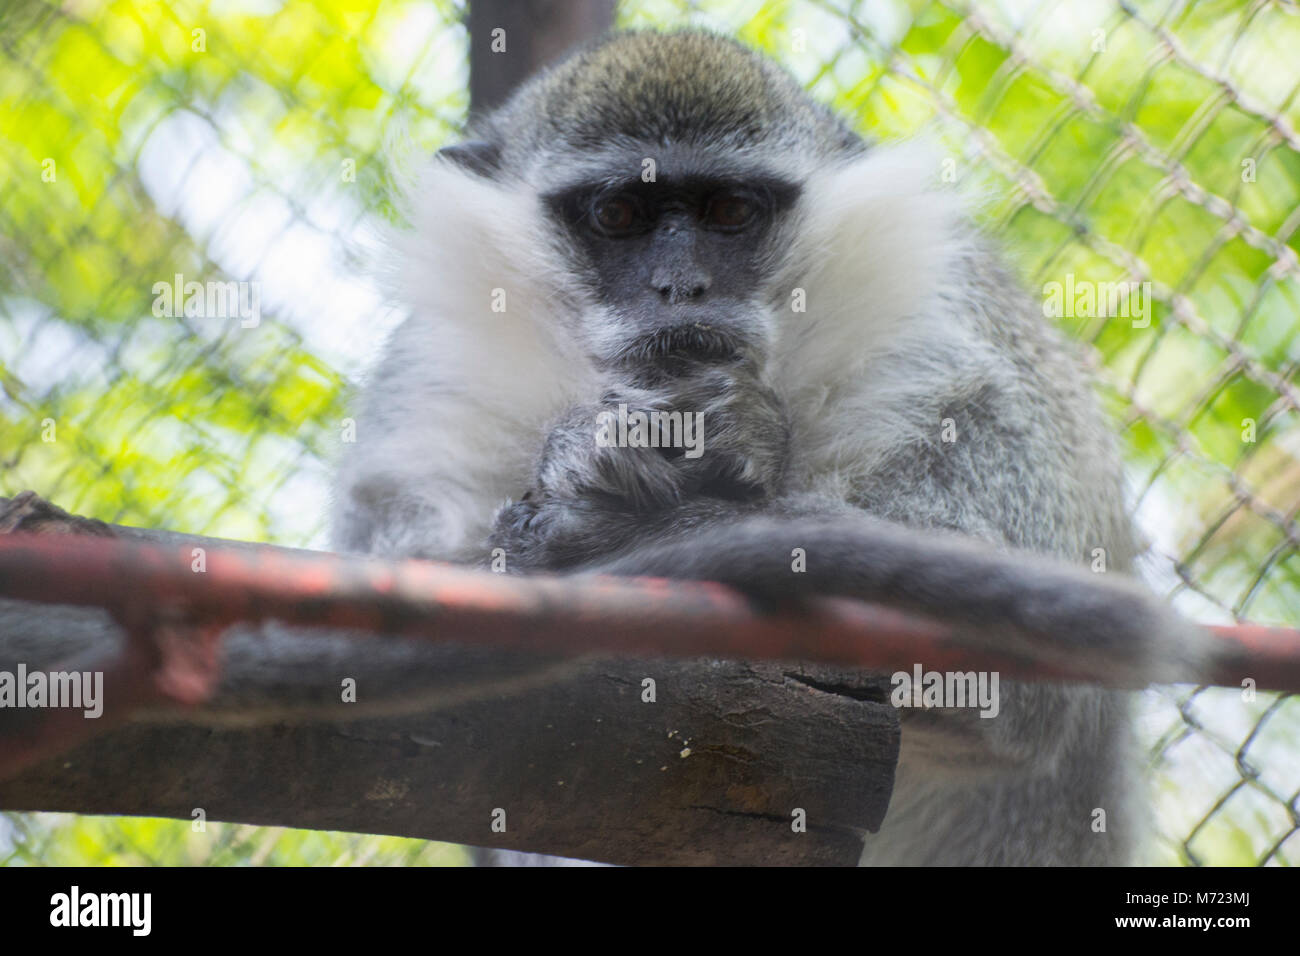 Monkey in zoo Stock Photo